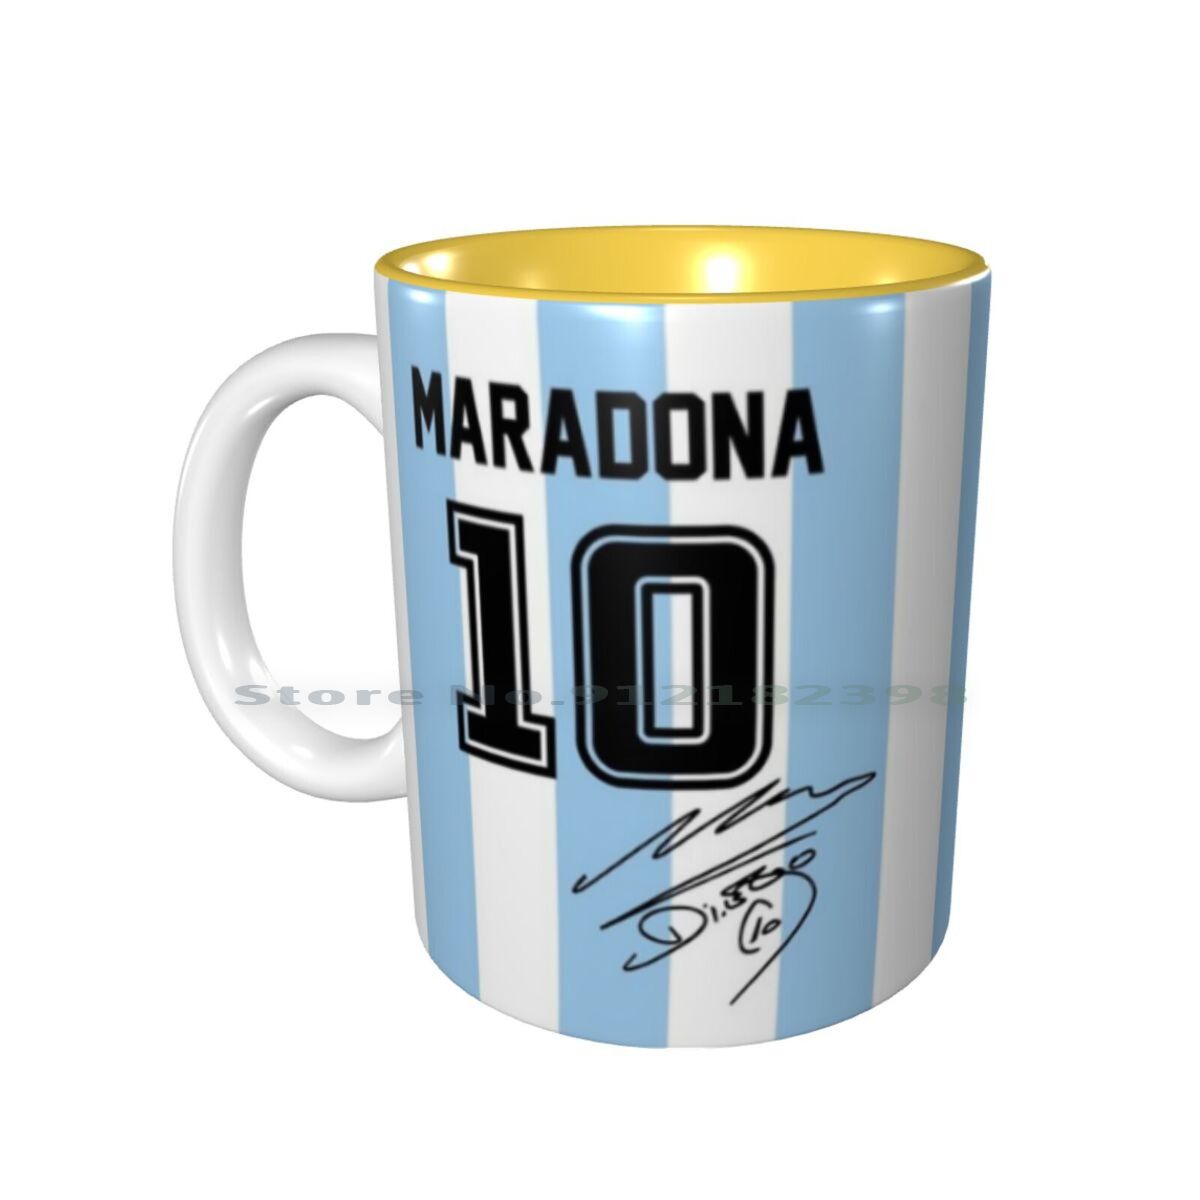 New Maradona Jersey Ceramic Mugs